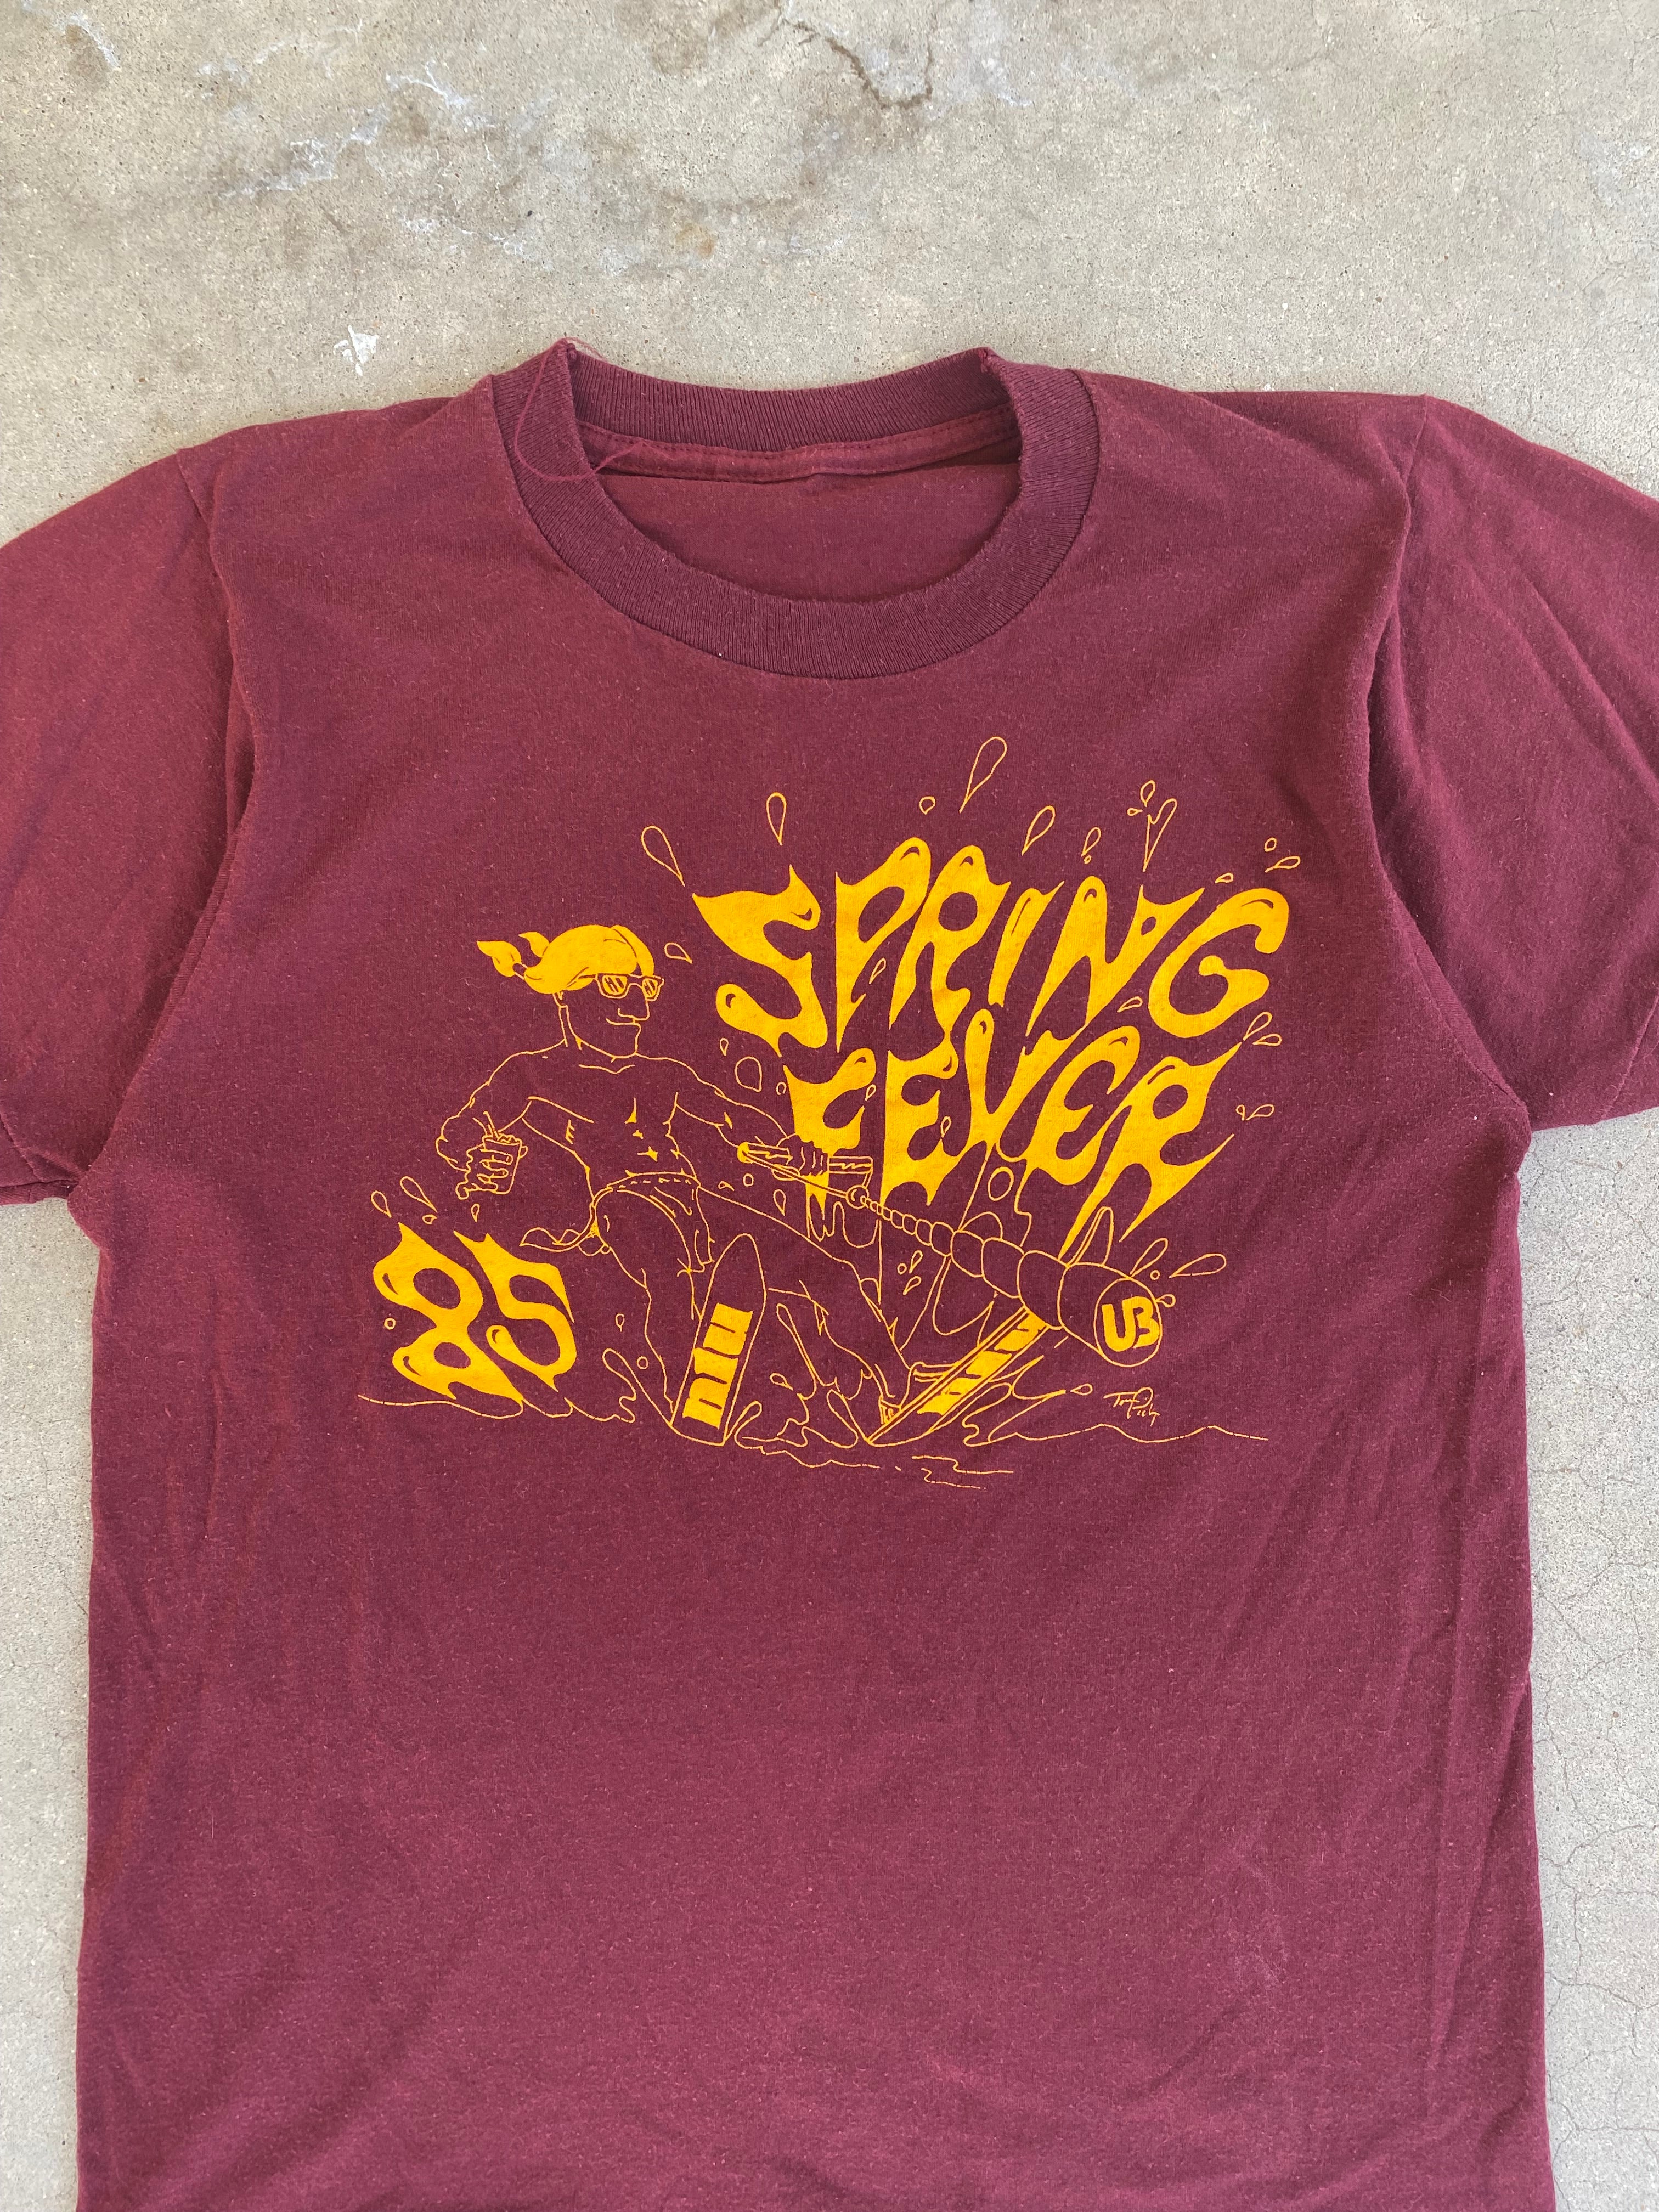 1985 NLU Spring Fever Tee (S/M)